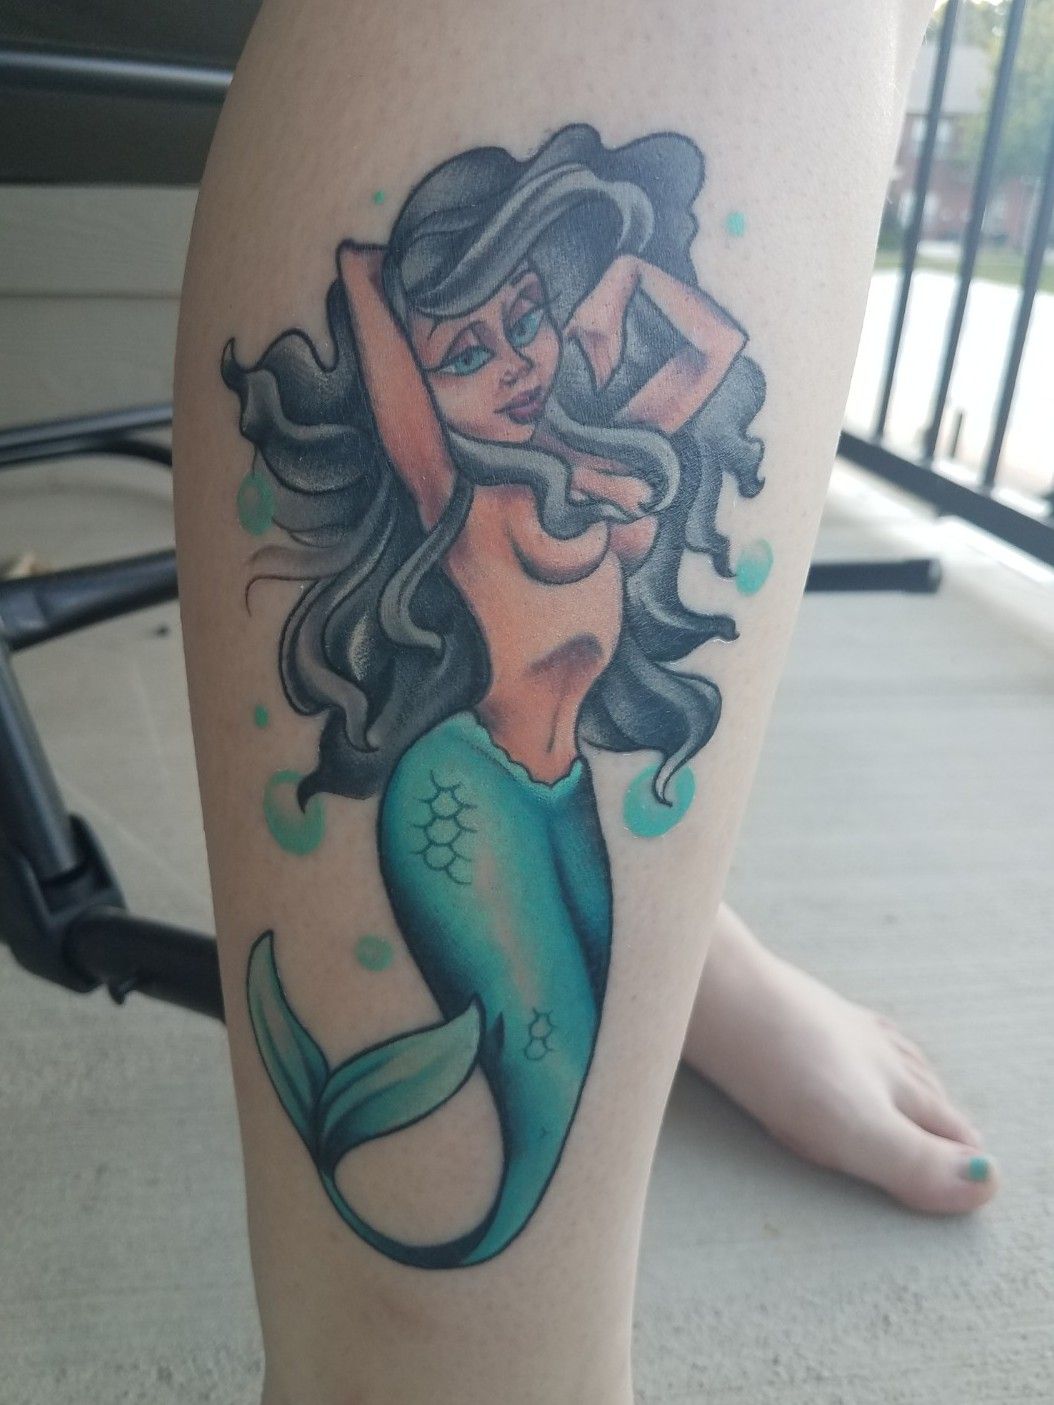 6201 Mermaid Tattoo Images Stock Photos  Vectors  Shutterstock